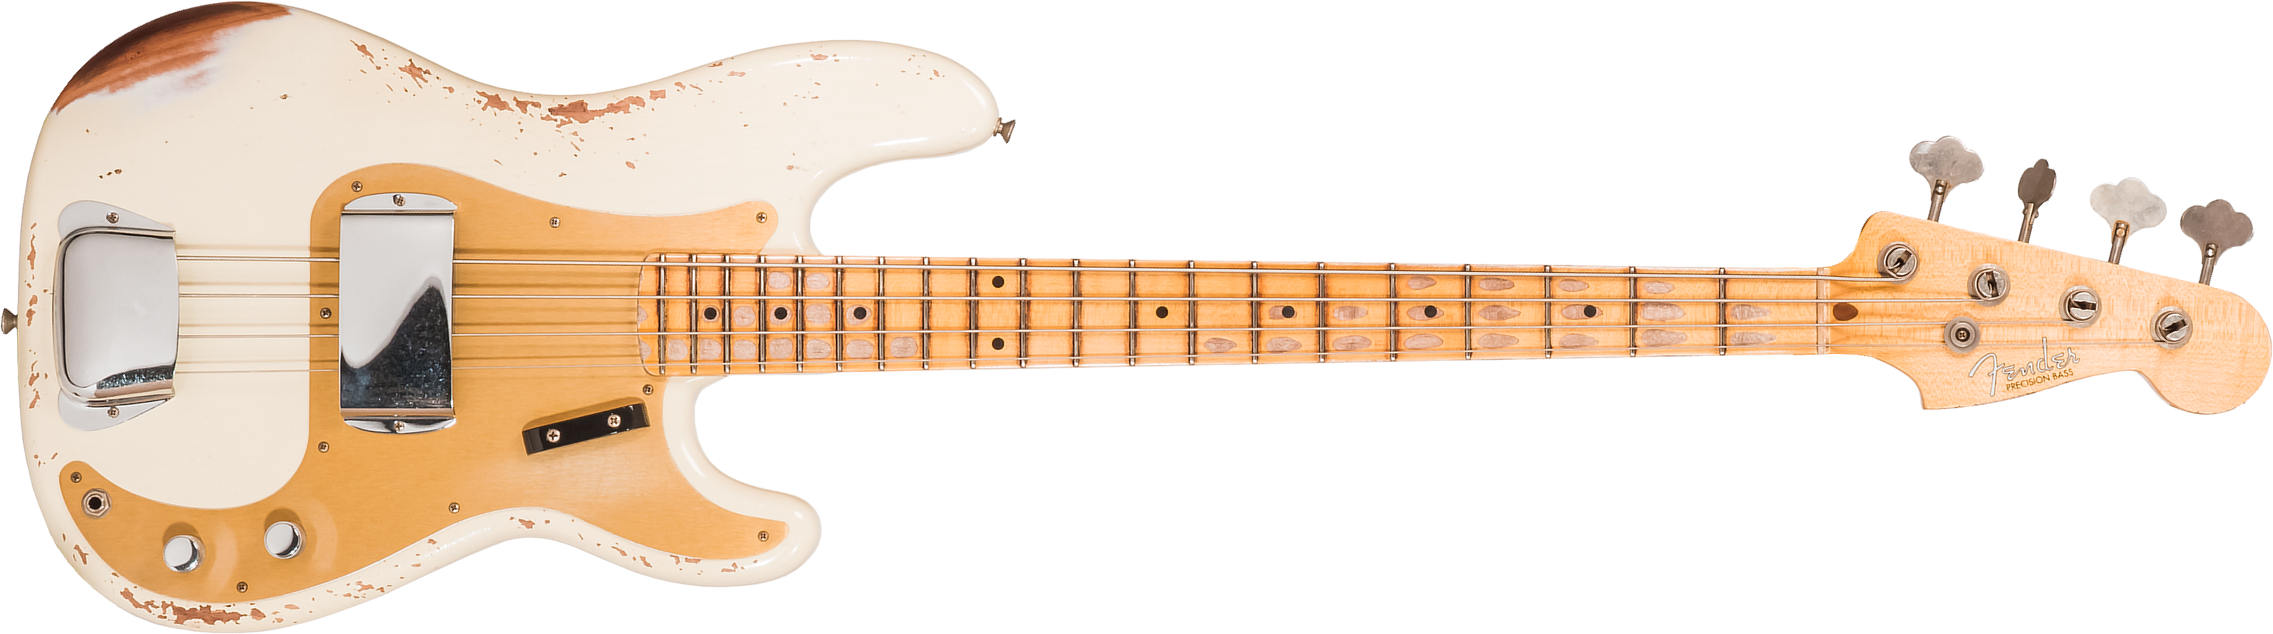 Fender Custom Shop Precision Bass 1958 Mn #cz569181 - Heavy Relic Vintage White - Solidbody E-bass - Main picture